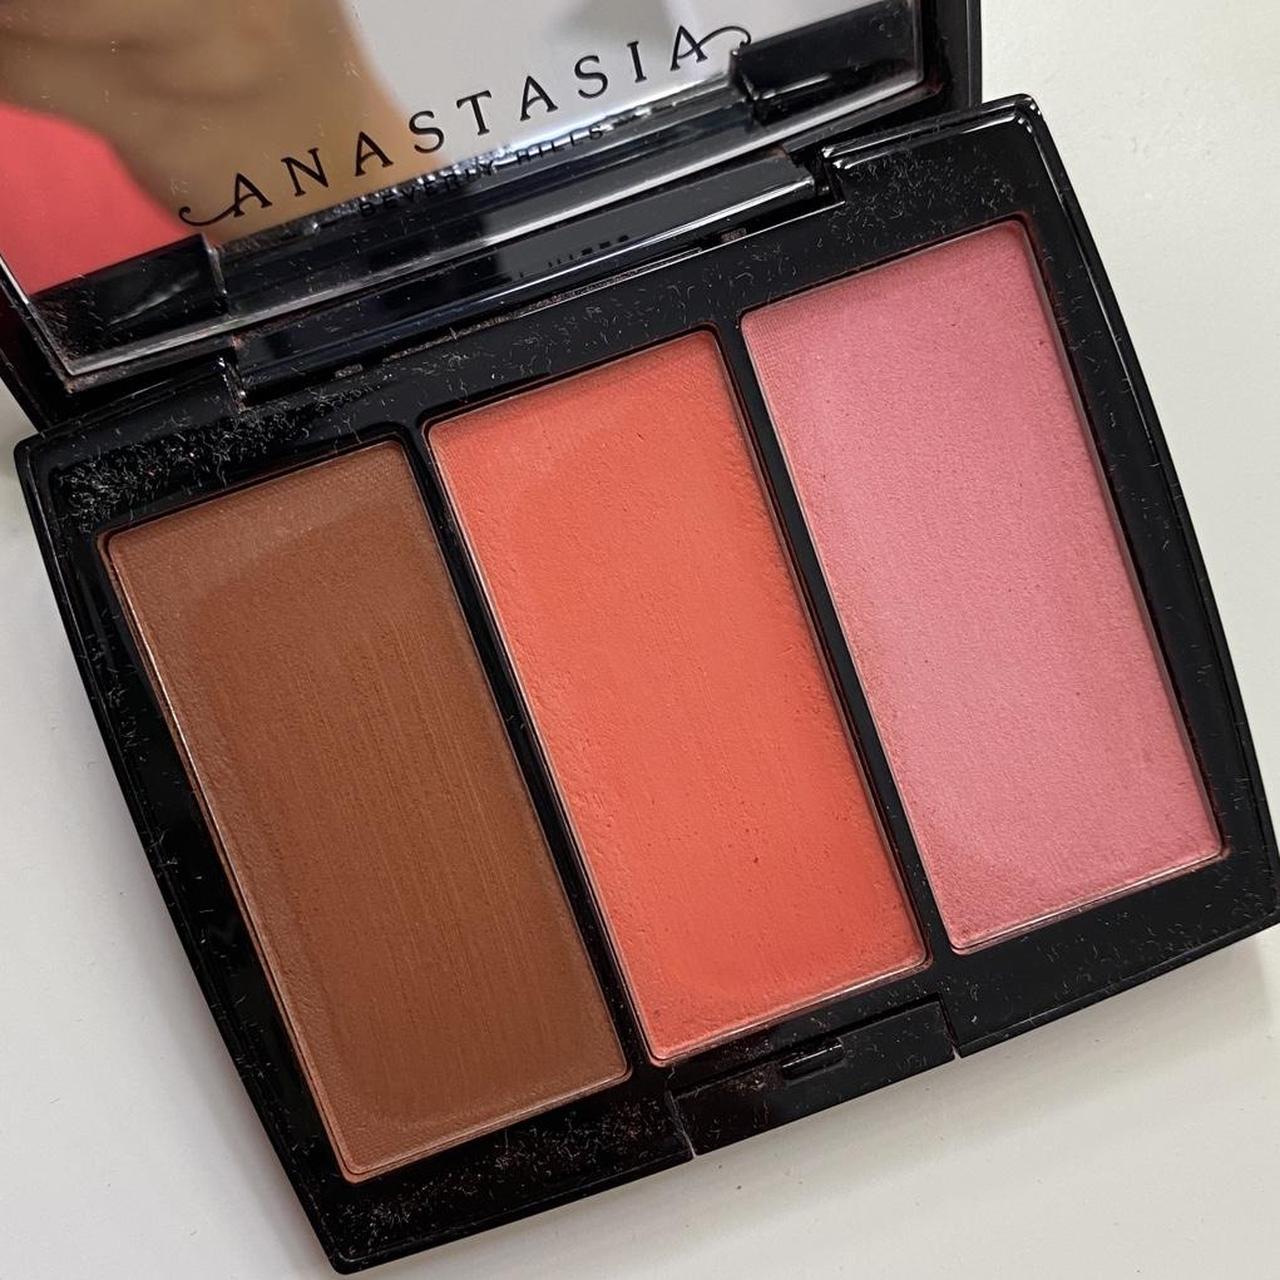 Anastasia Beverly Hills Orange and Pink Makeup (4)